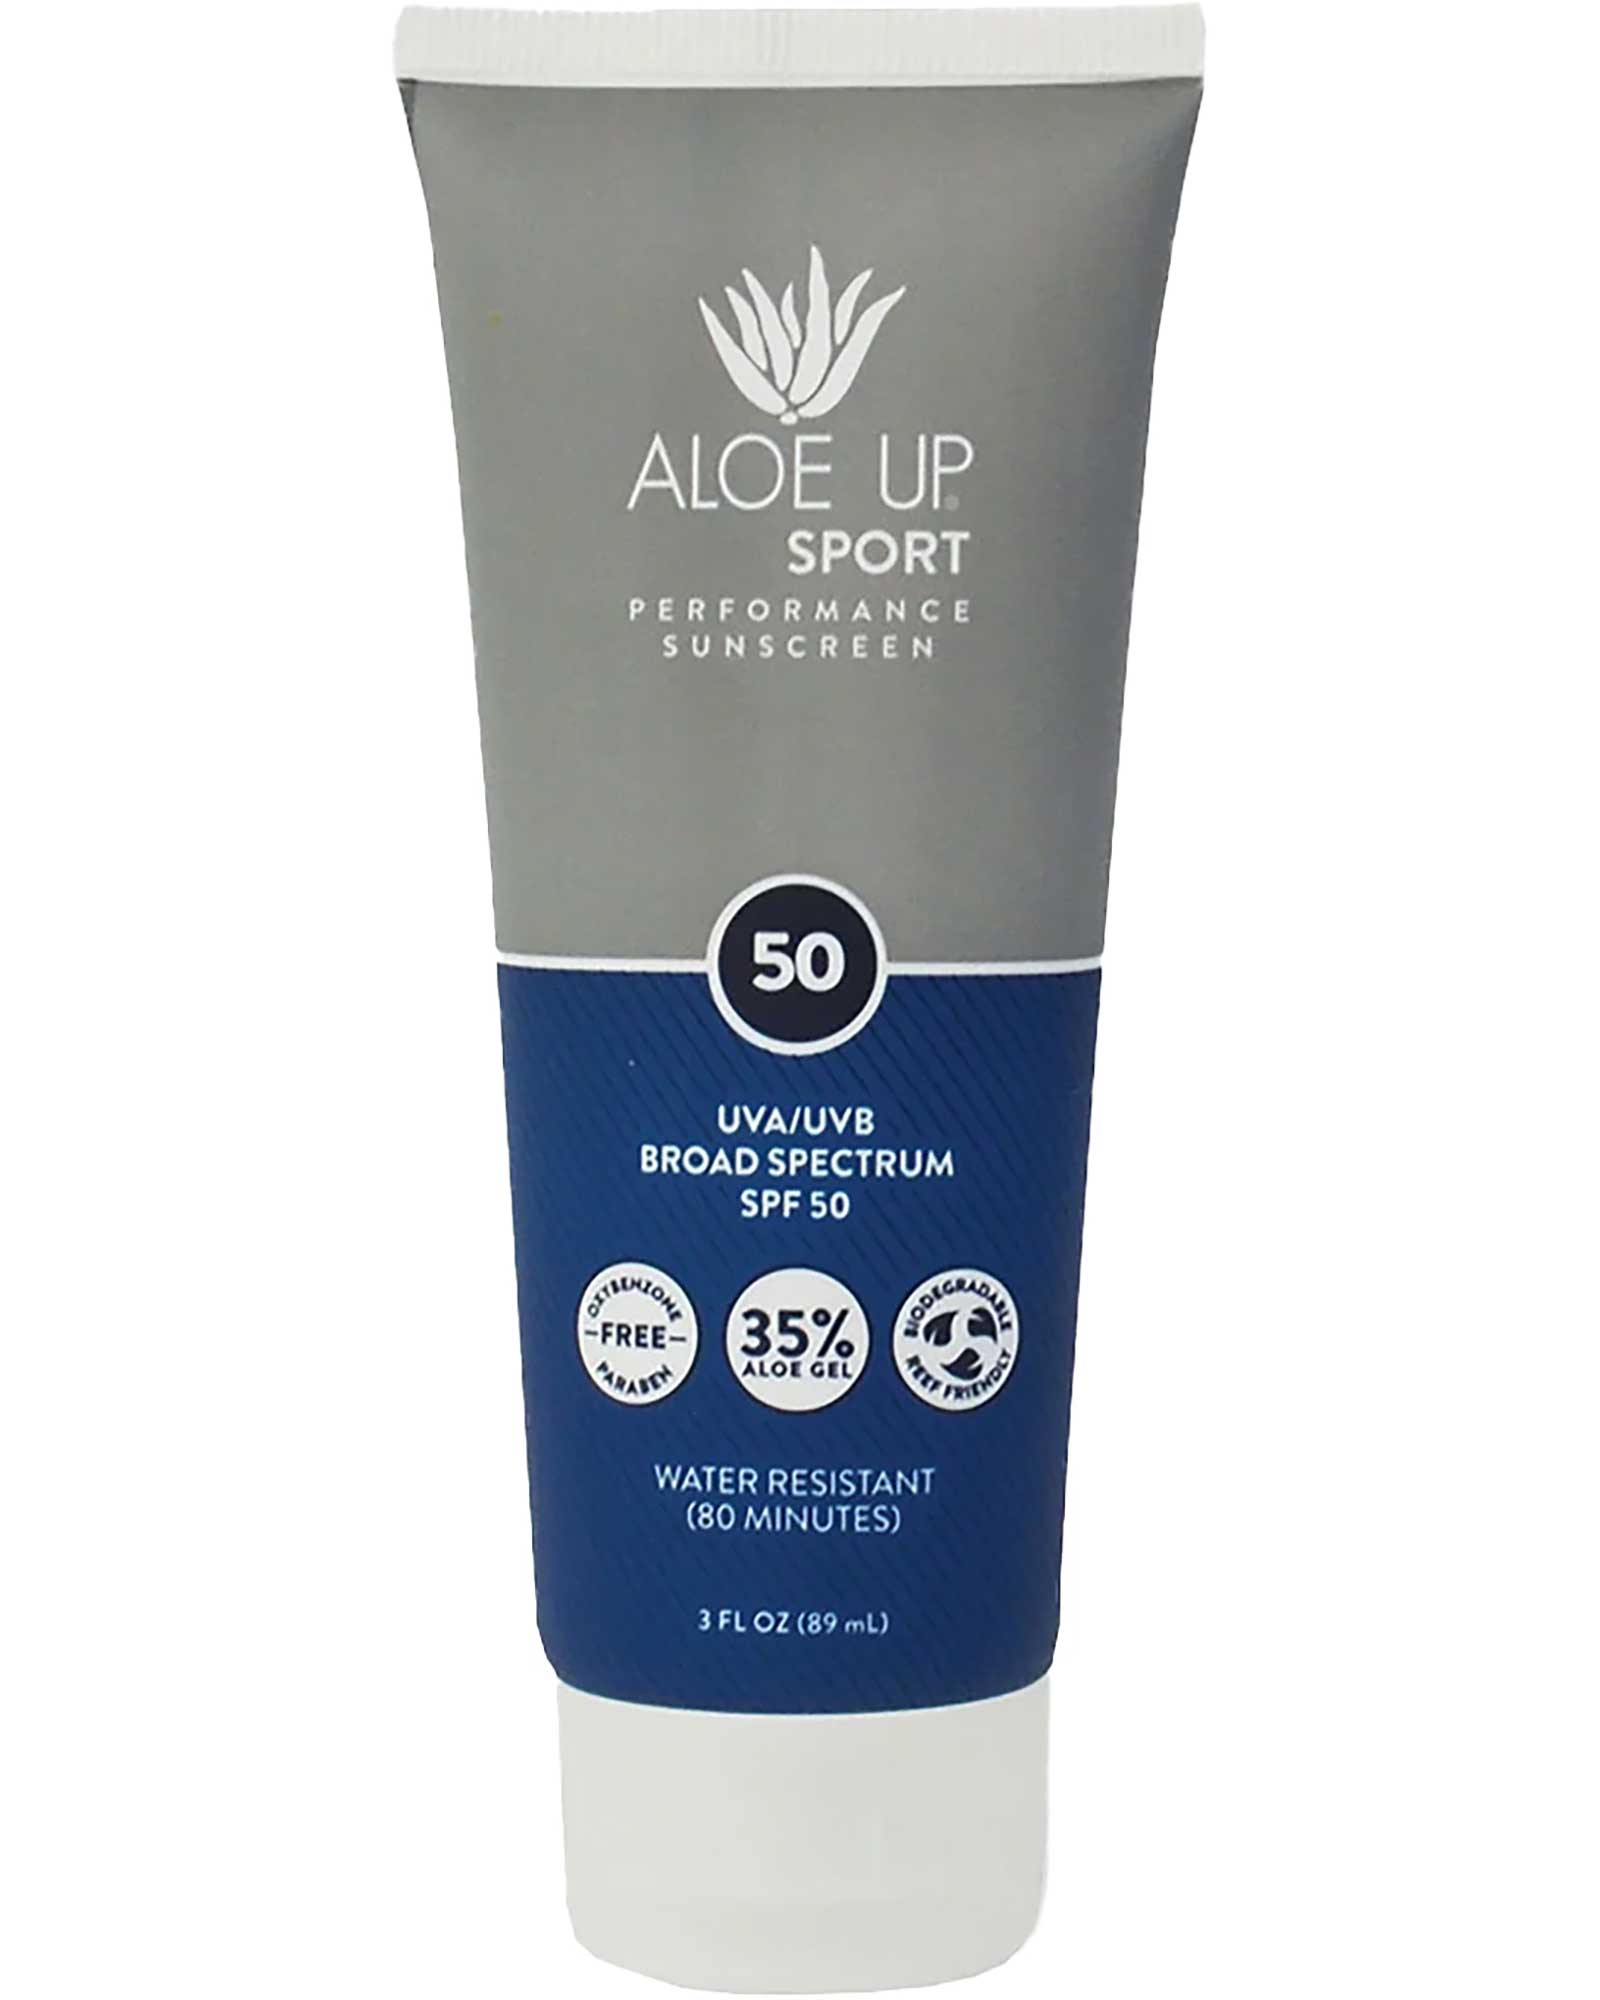 Aloe Up Sport SPF 50 Sunscreen